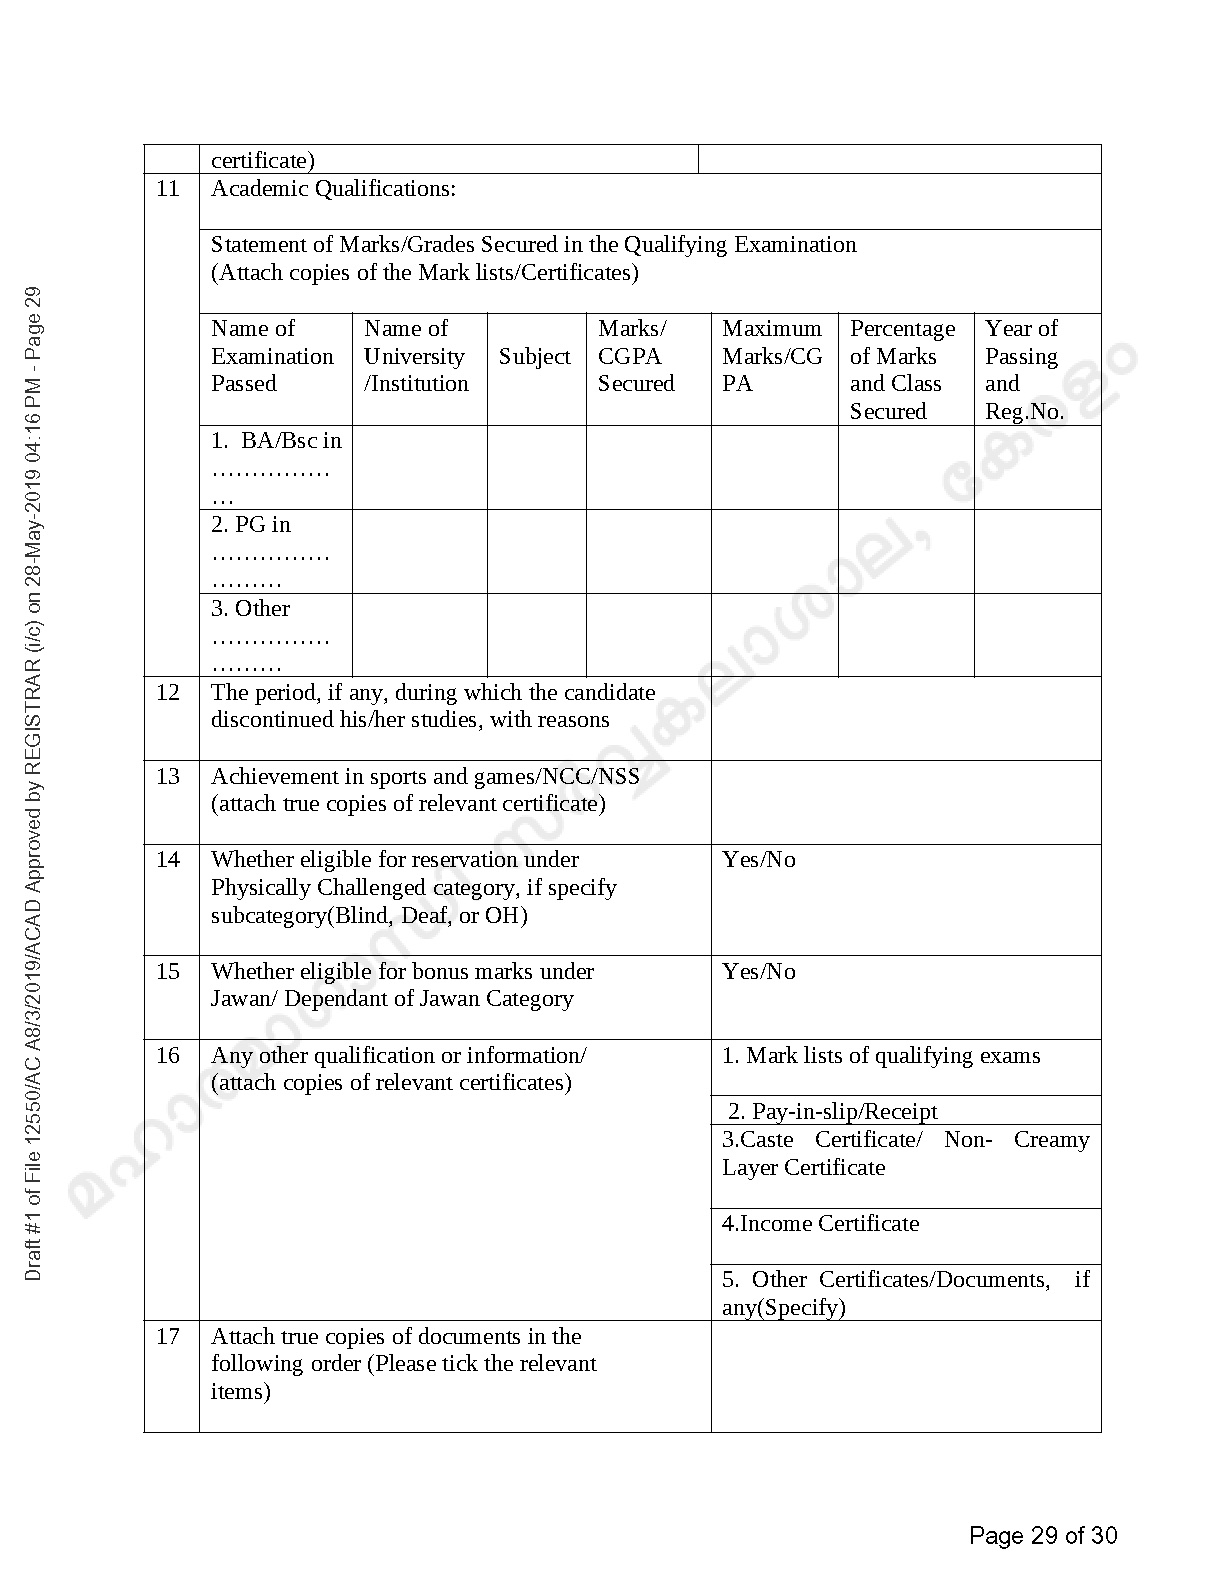 MG University B Ed Prospectus and Application form 2019 2020 - Notification Image 21